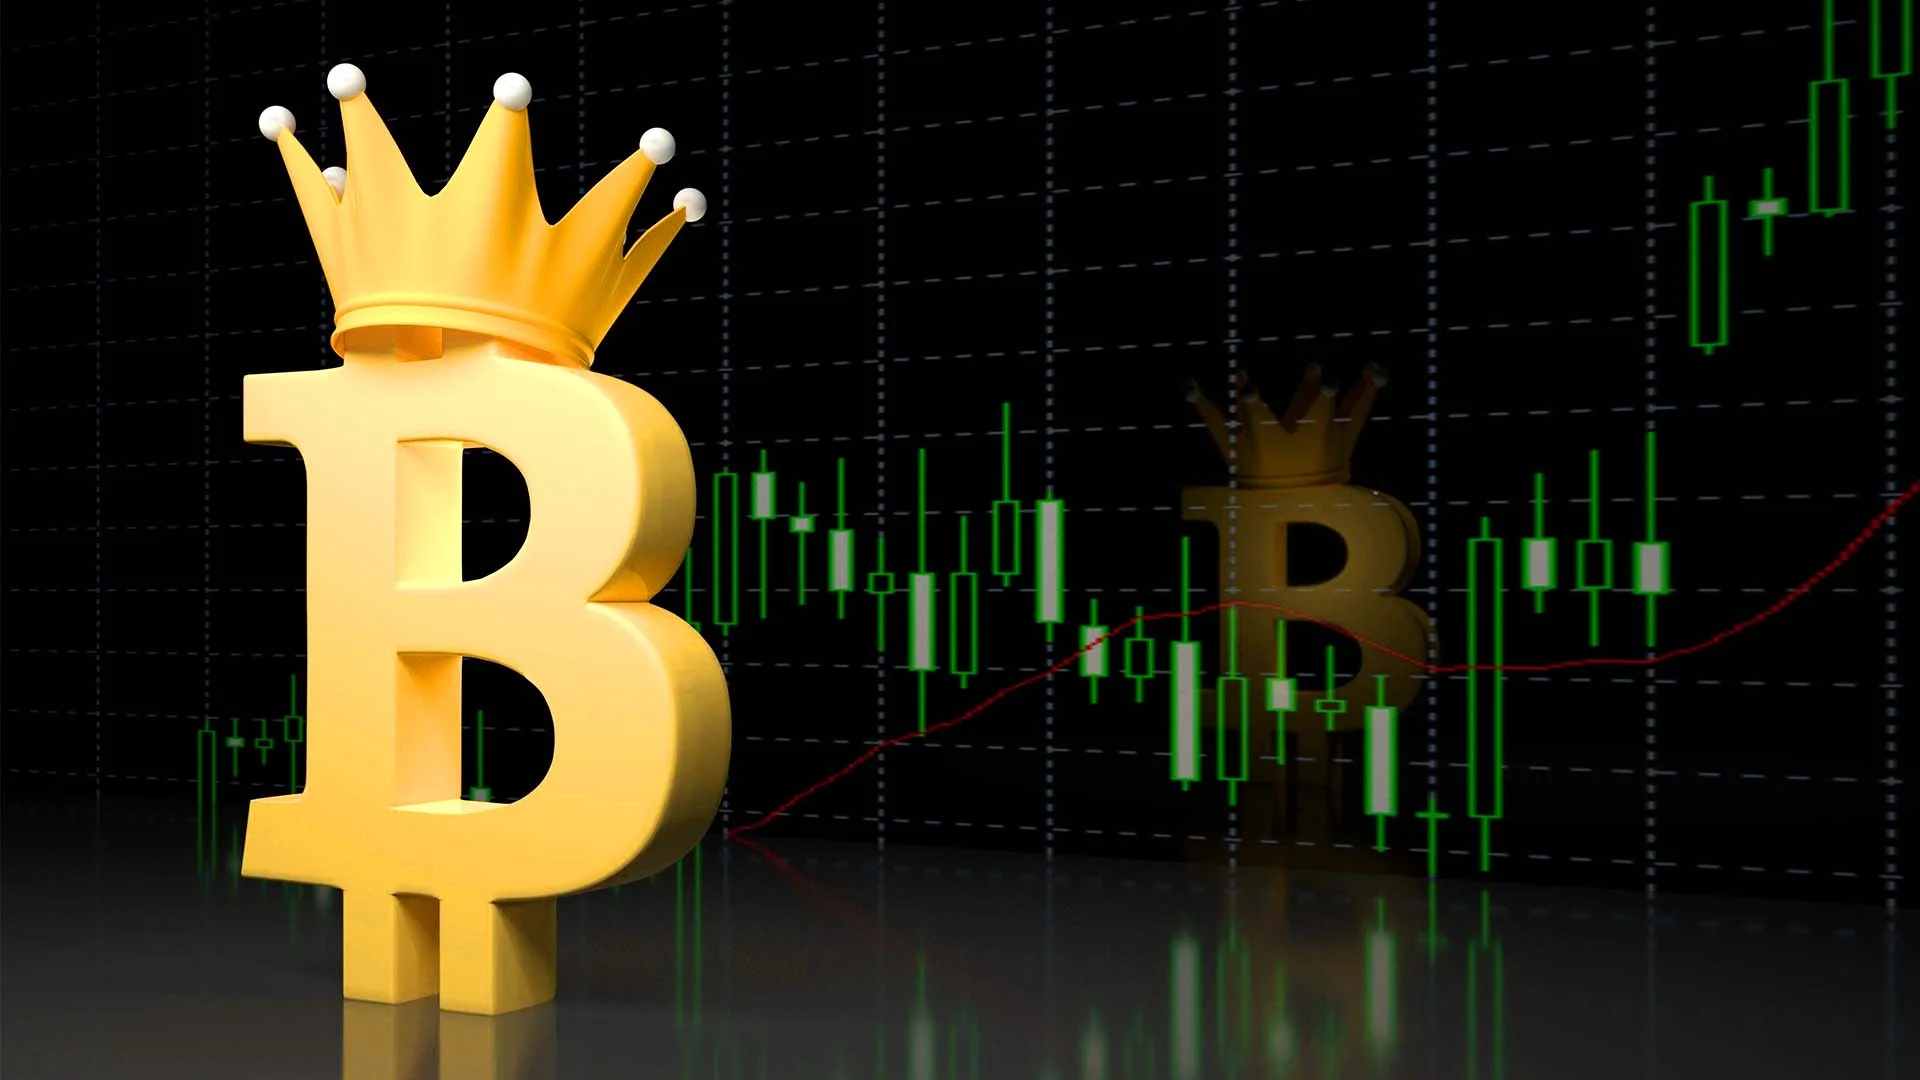 Bitcoin Price Forecast - Will BTC Rise?